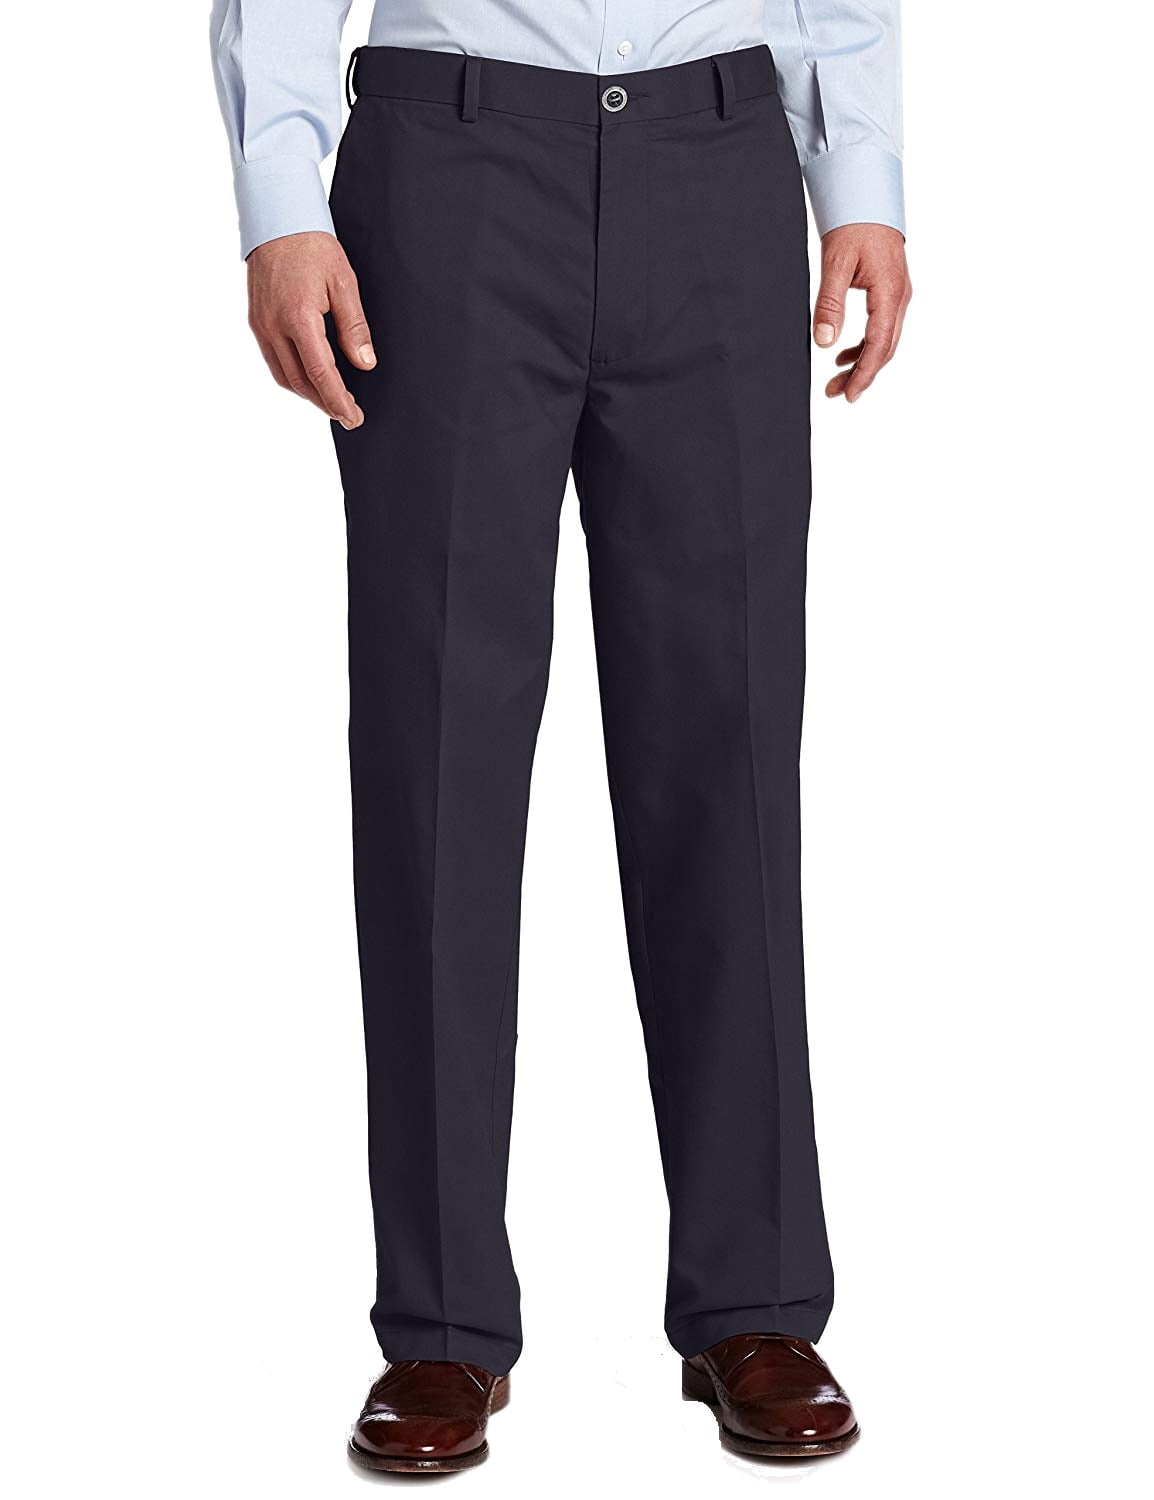 Mens Pants Navy 40x29 Relaxed Fit Comfort Khakis 40 - Walmart.com